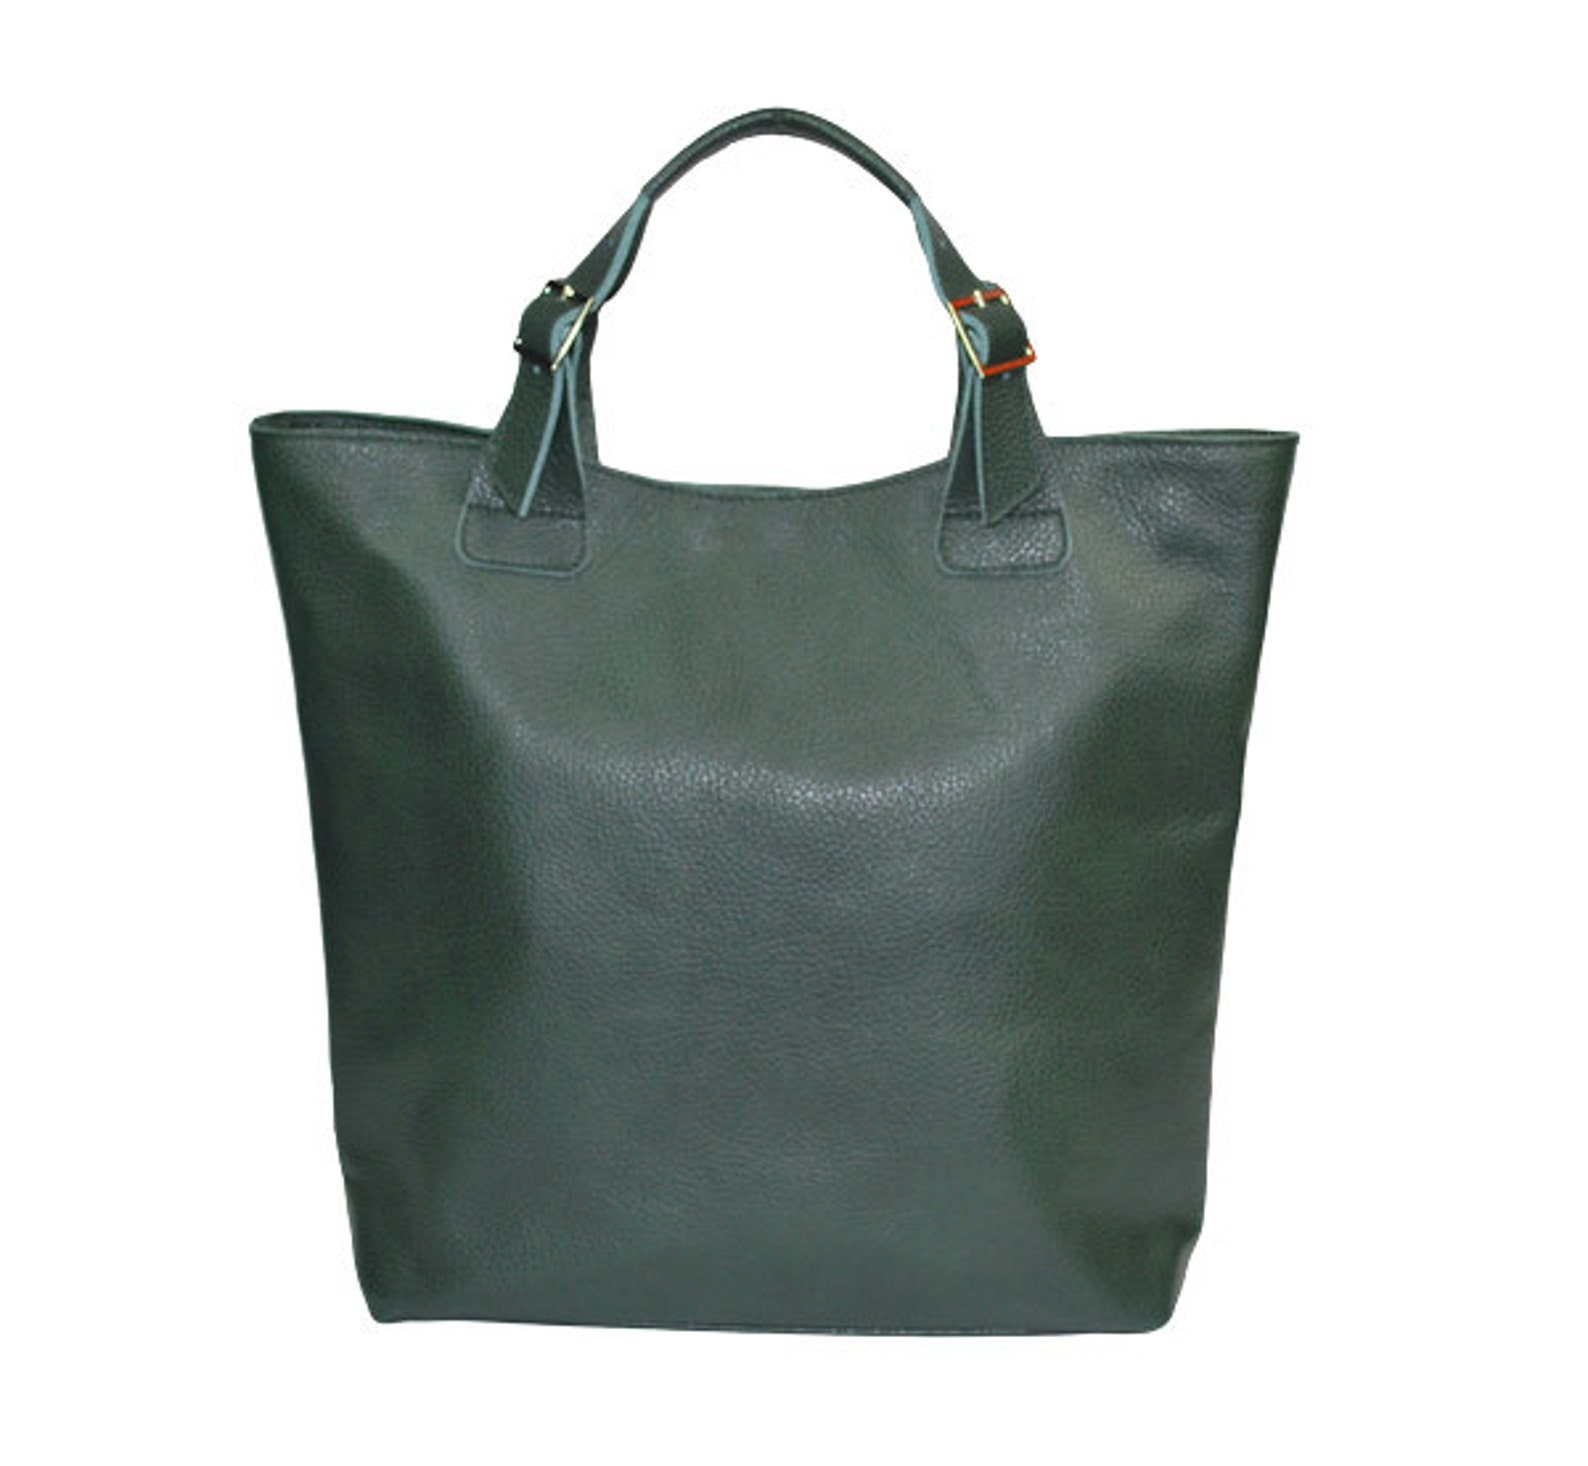 Huge Elegant Leather Bag Urban Style Tote Dark Green Color | Etsy